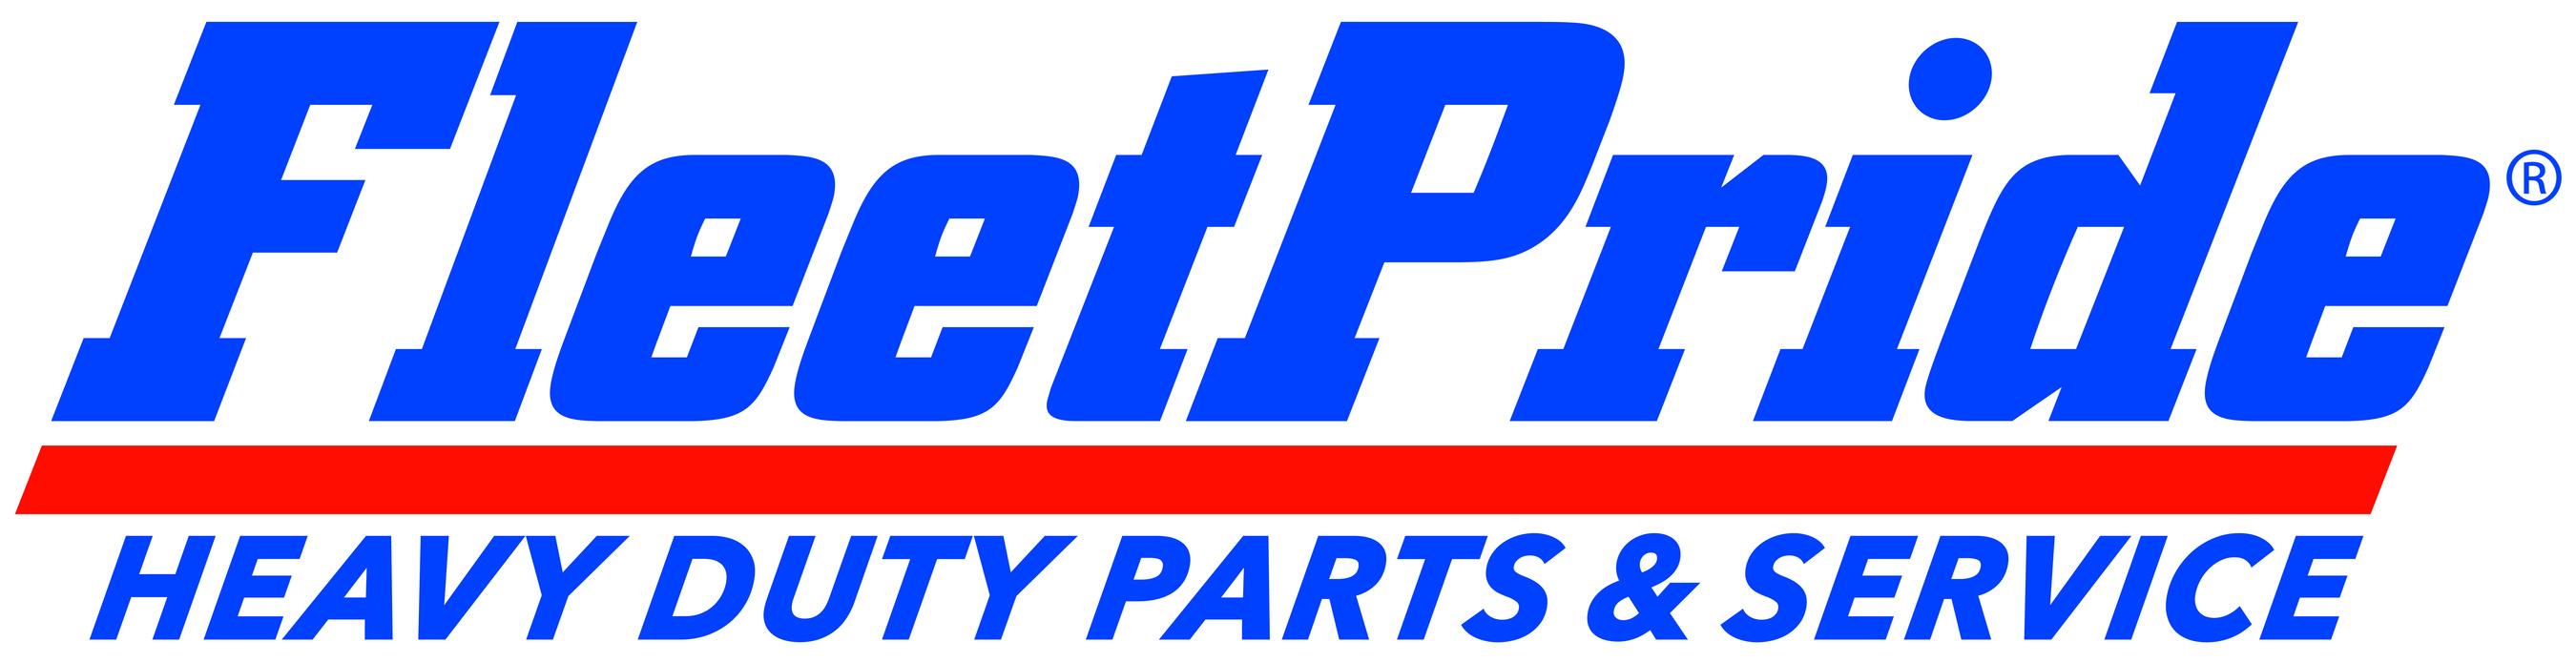 FleetPride's refreshed logo features the new tagline “Heavy Duty Parts & Service,” replacing its previous descriptor “Truck & Trailer Parts.” (PRNewsfoto/FleetPride, Inc.)